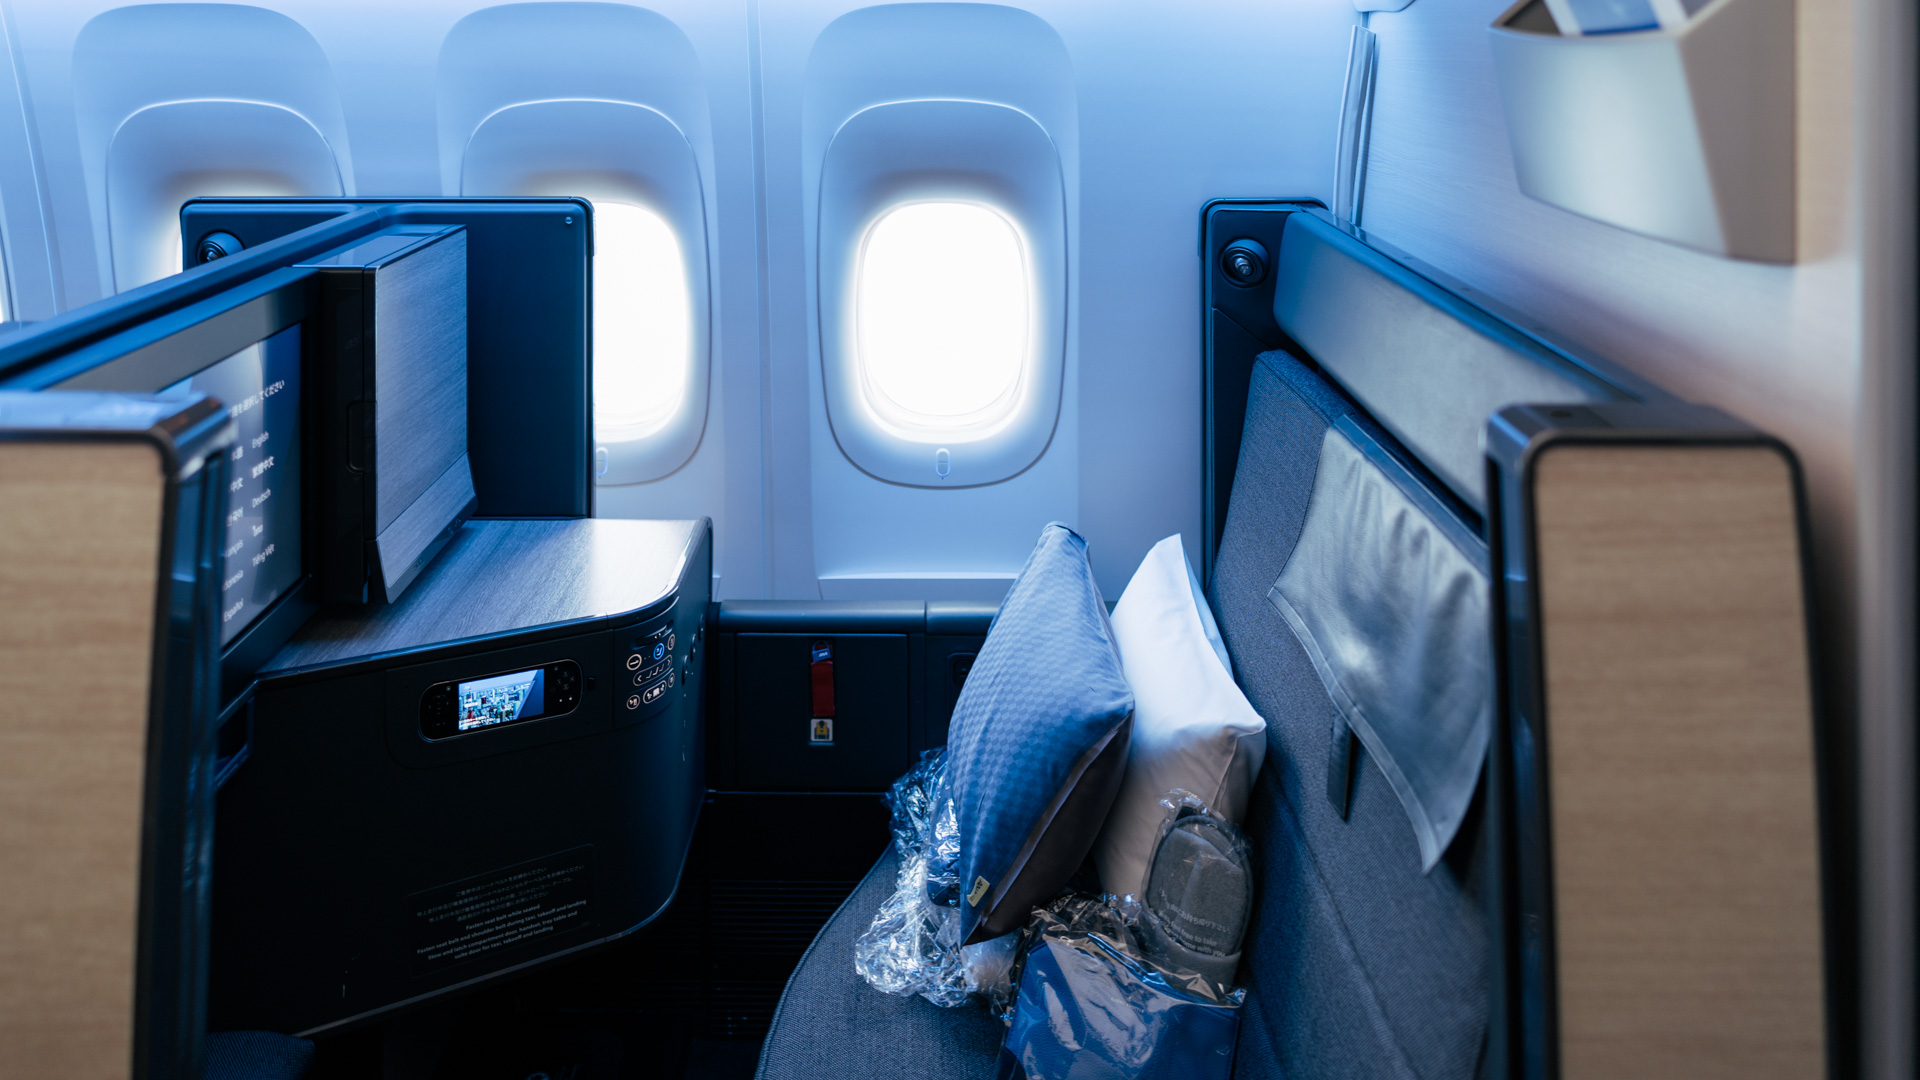 ANA Boeing 777 Business Class Window Seat